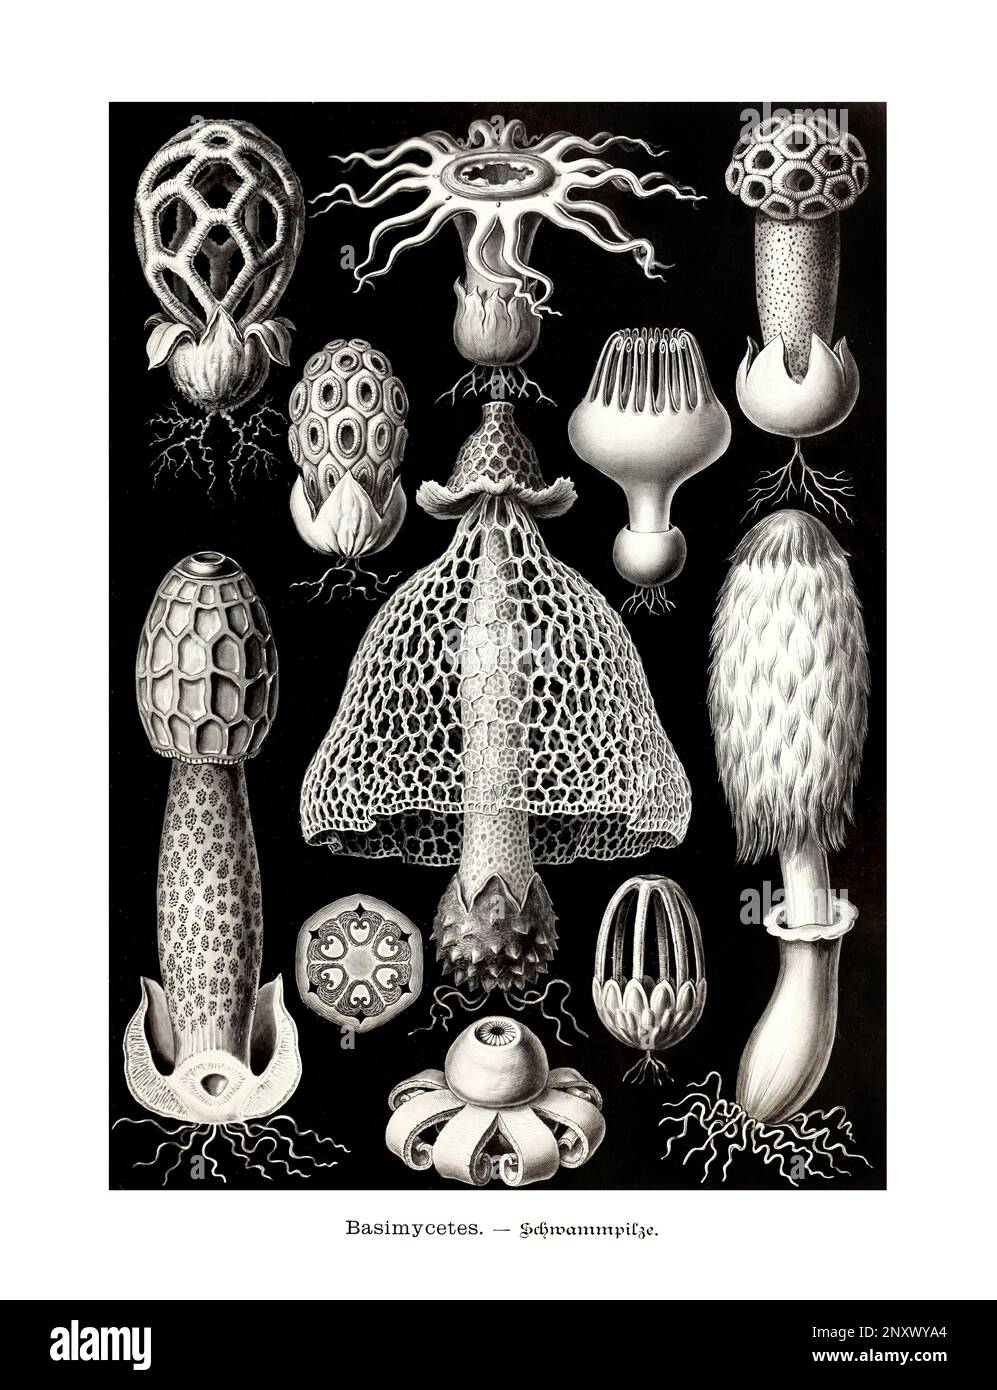 ERNST HAECKEL ART - Basimycètes - 19th Century - Antique Zoological illustration - illustrations du livre : "Art Forms in nature" Banque D'Images